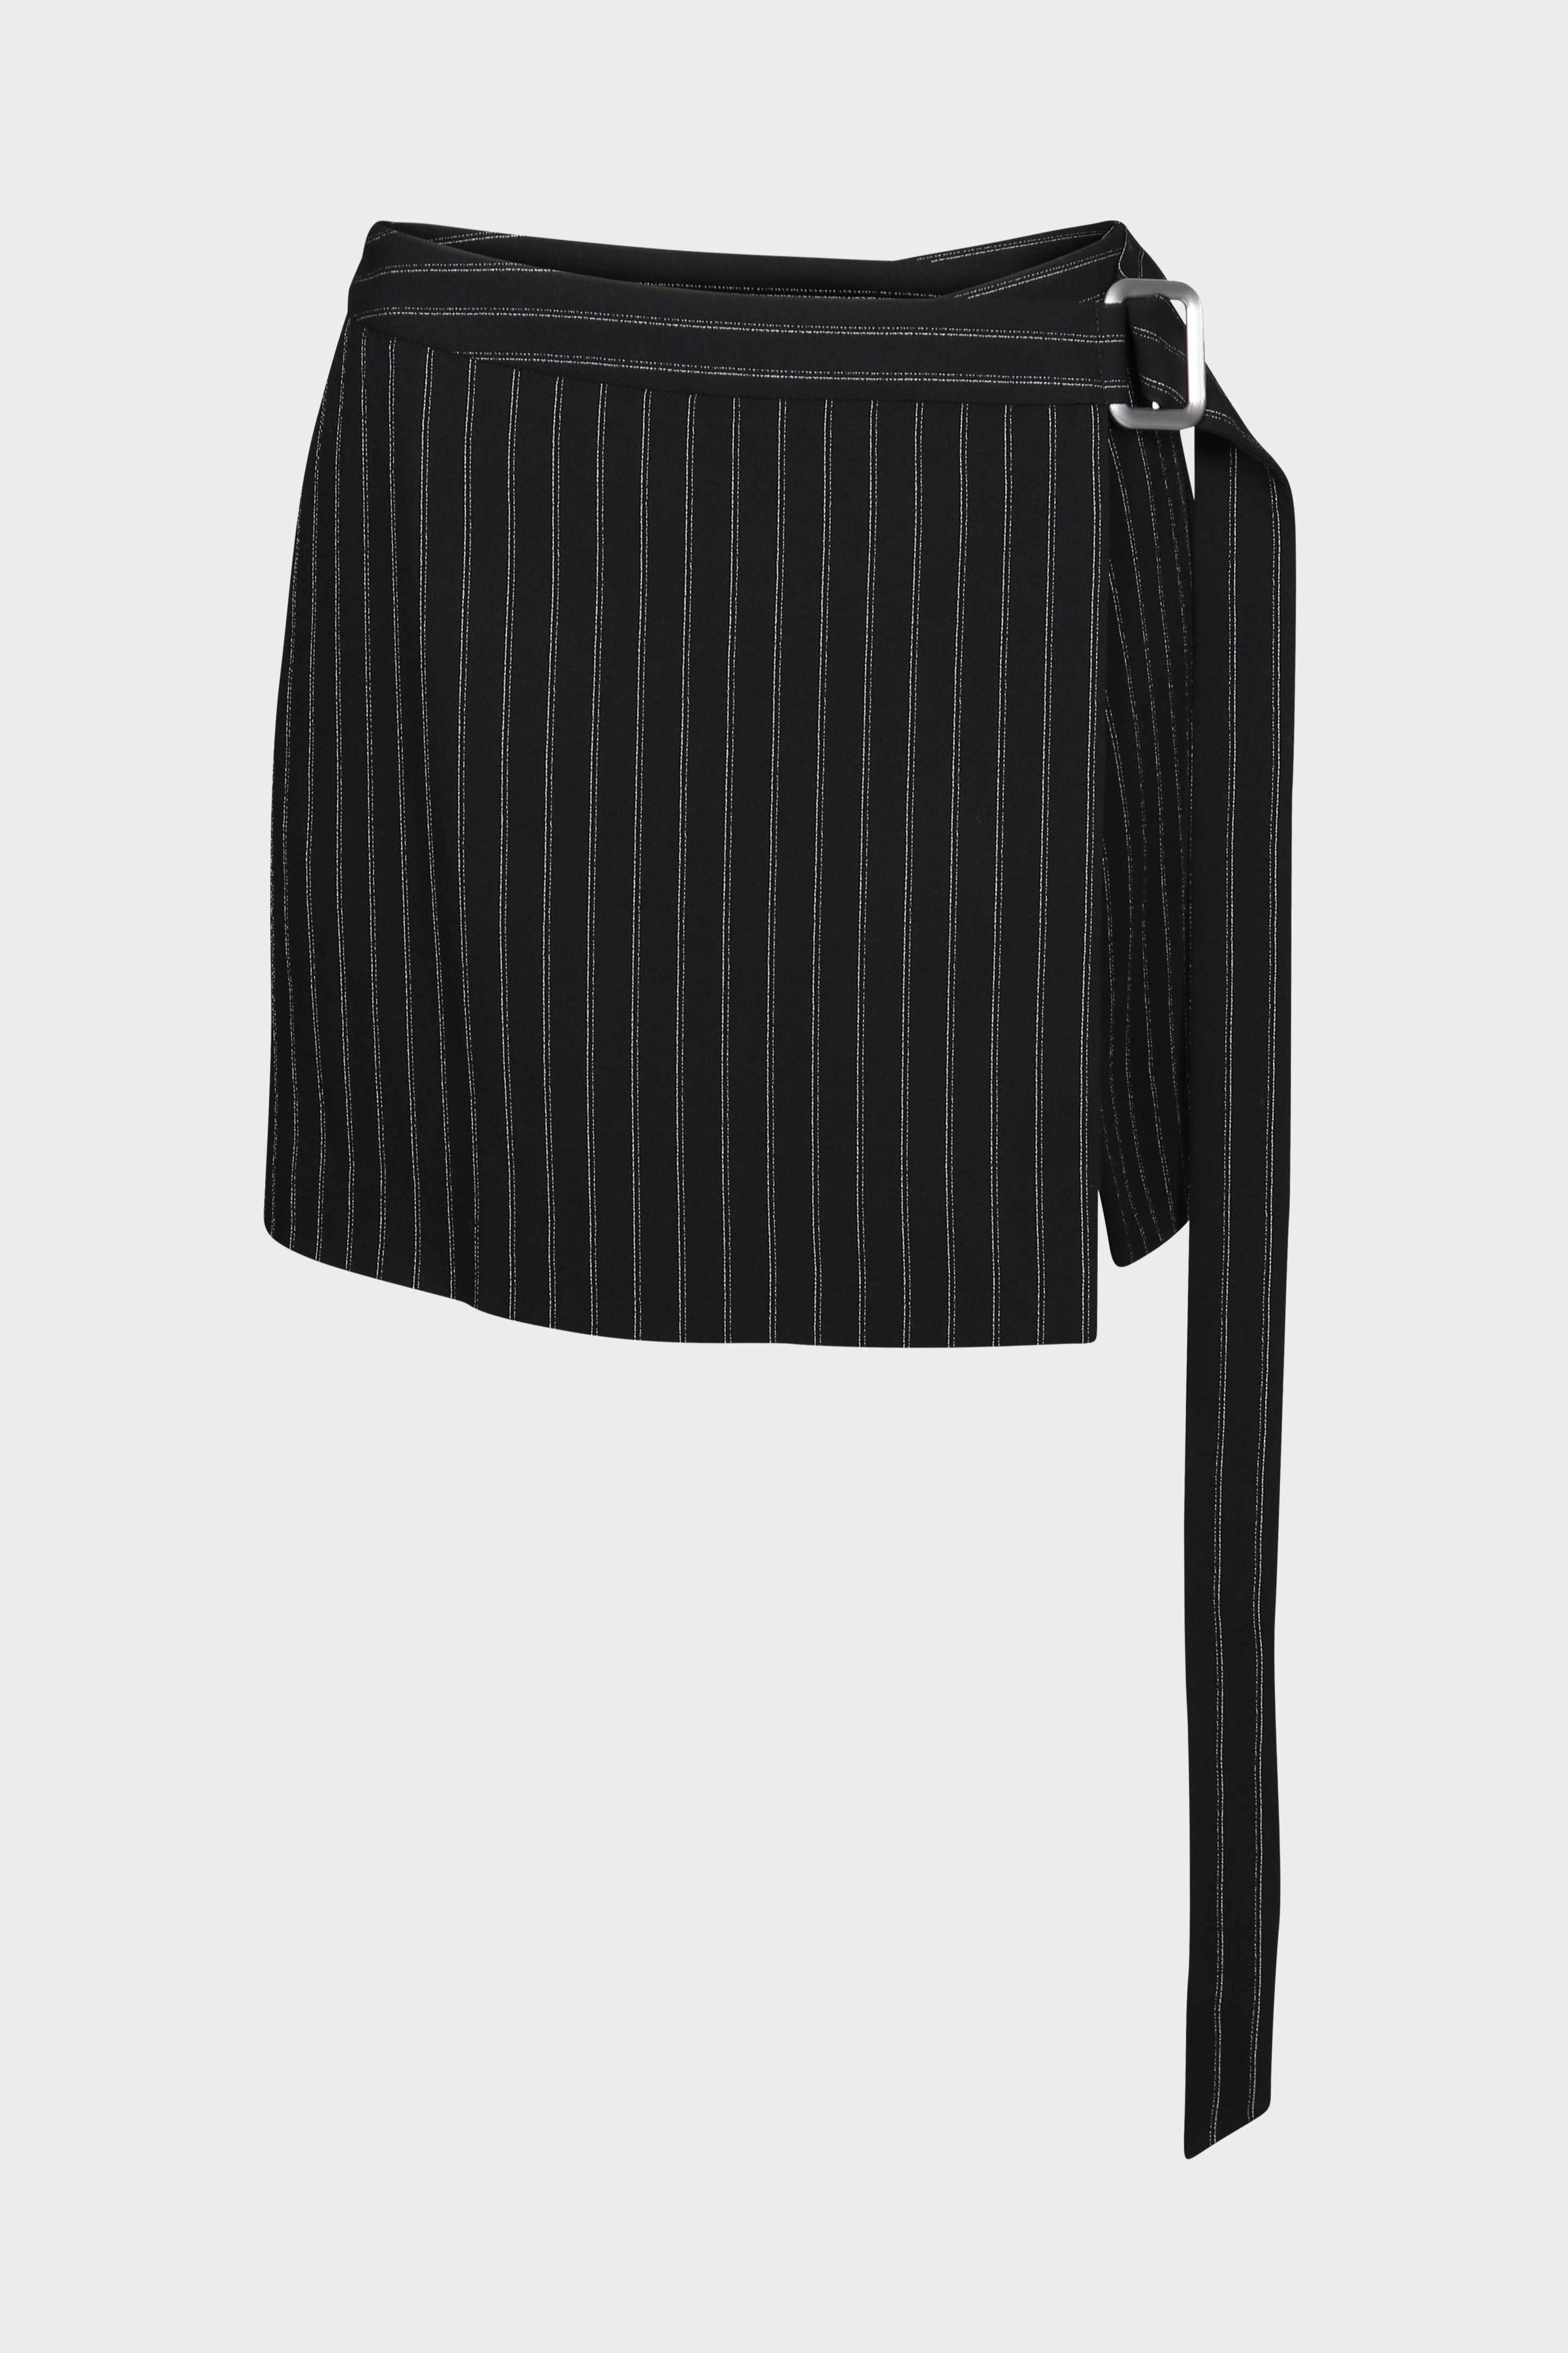 AMI PARIS Ray Mini Belted Skirt in Black/Chalk FR38 / DE36